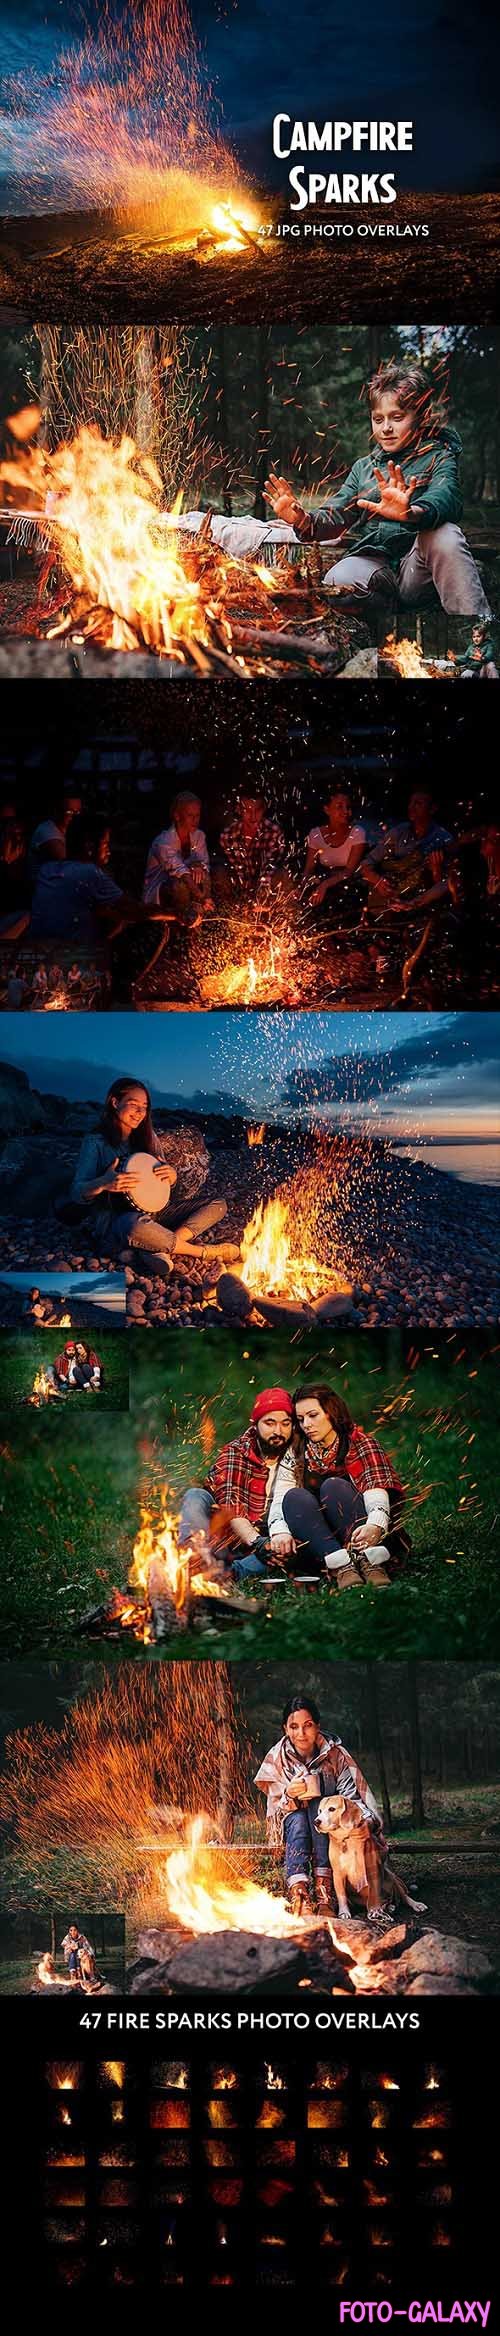 47 Campfire Spark Photo Overlays - 34818217 - 6672789